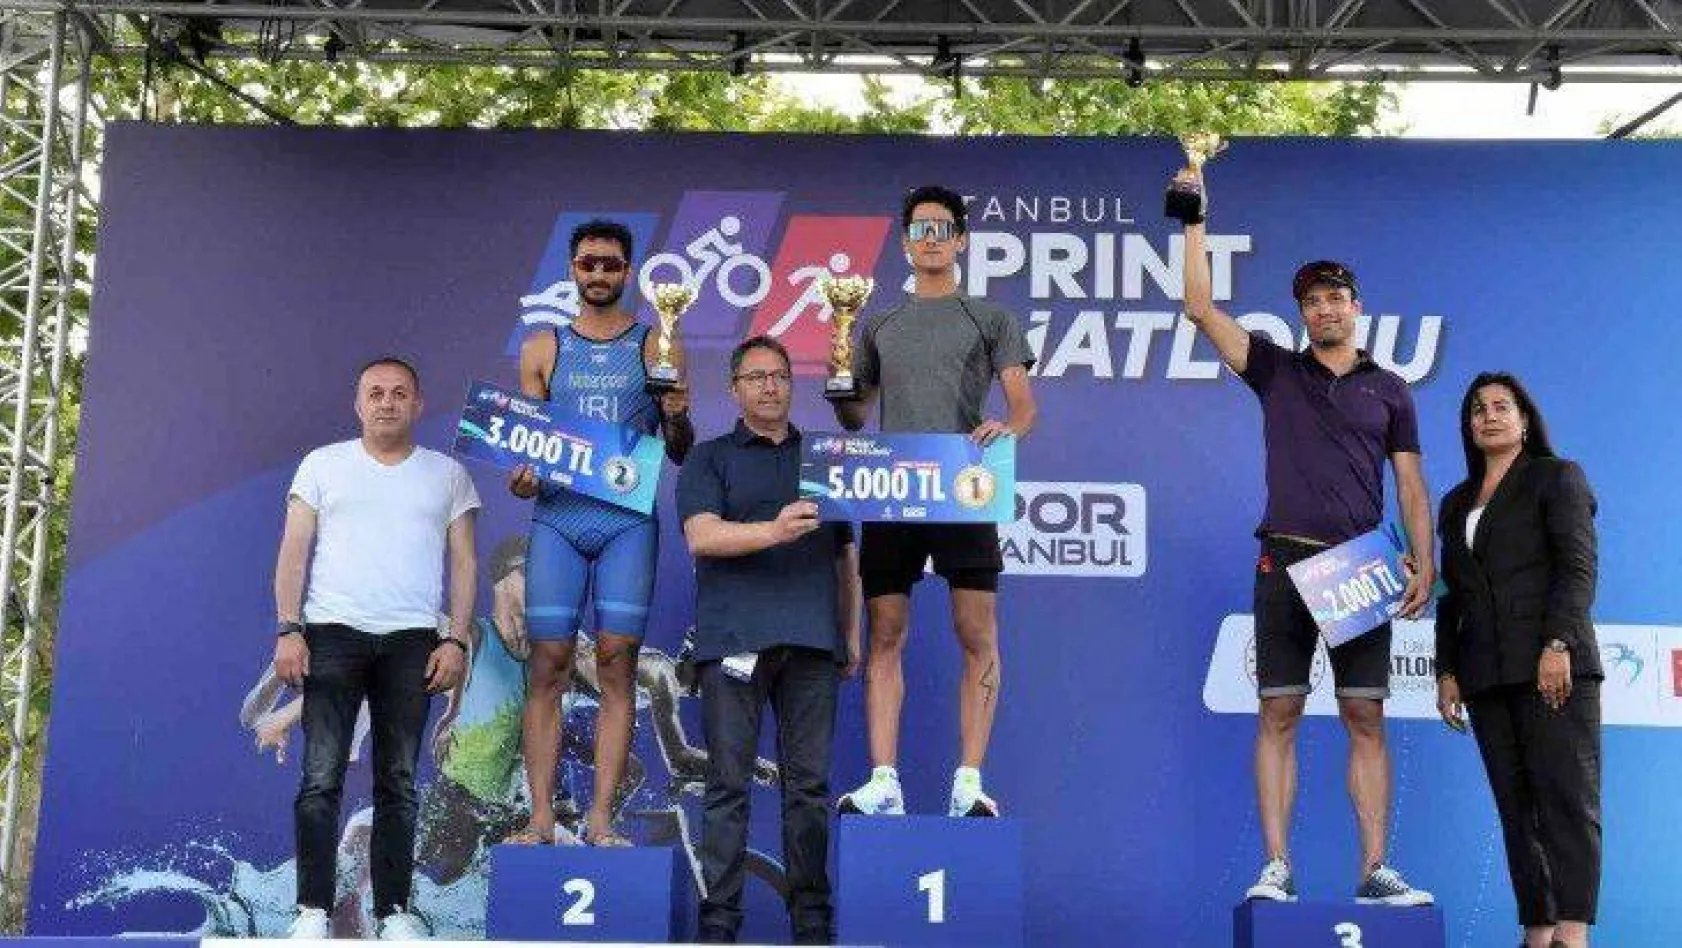 İstanbul Sprint Triatlonu sona erdi